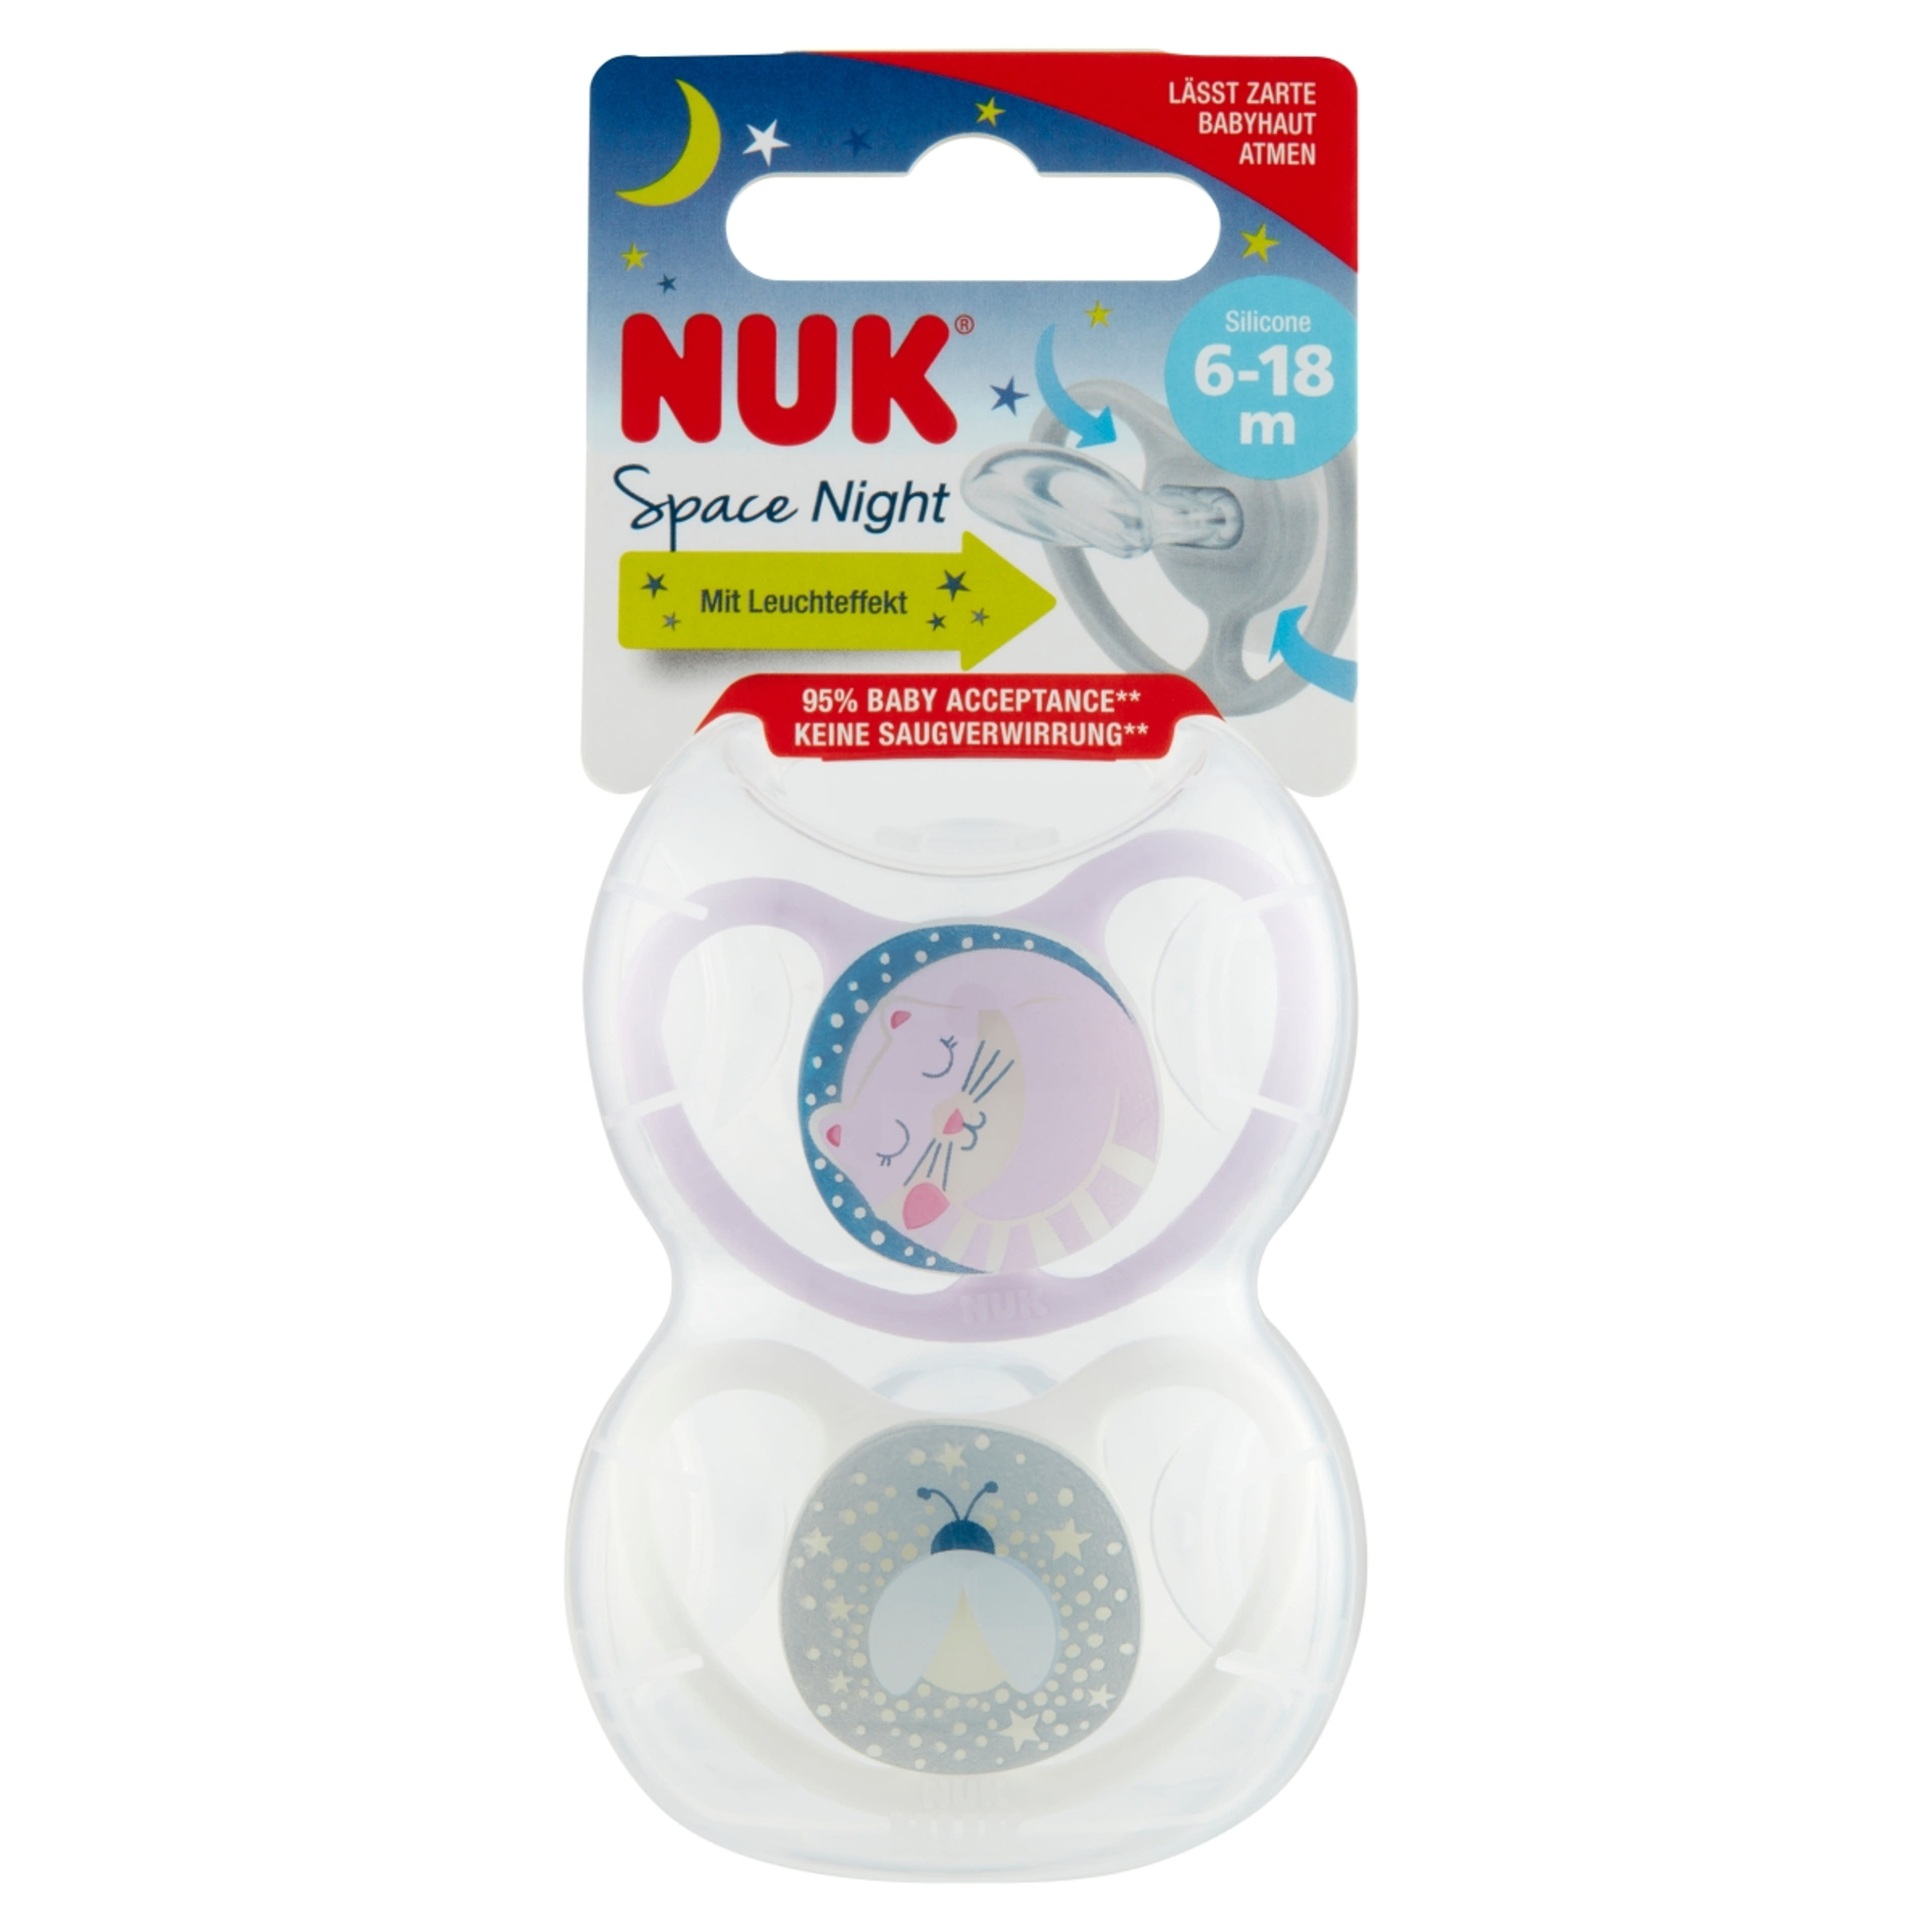 Nuk Space Night szilikon altatócumi, 6-18 hónapos korig, lány - 2 db